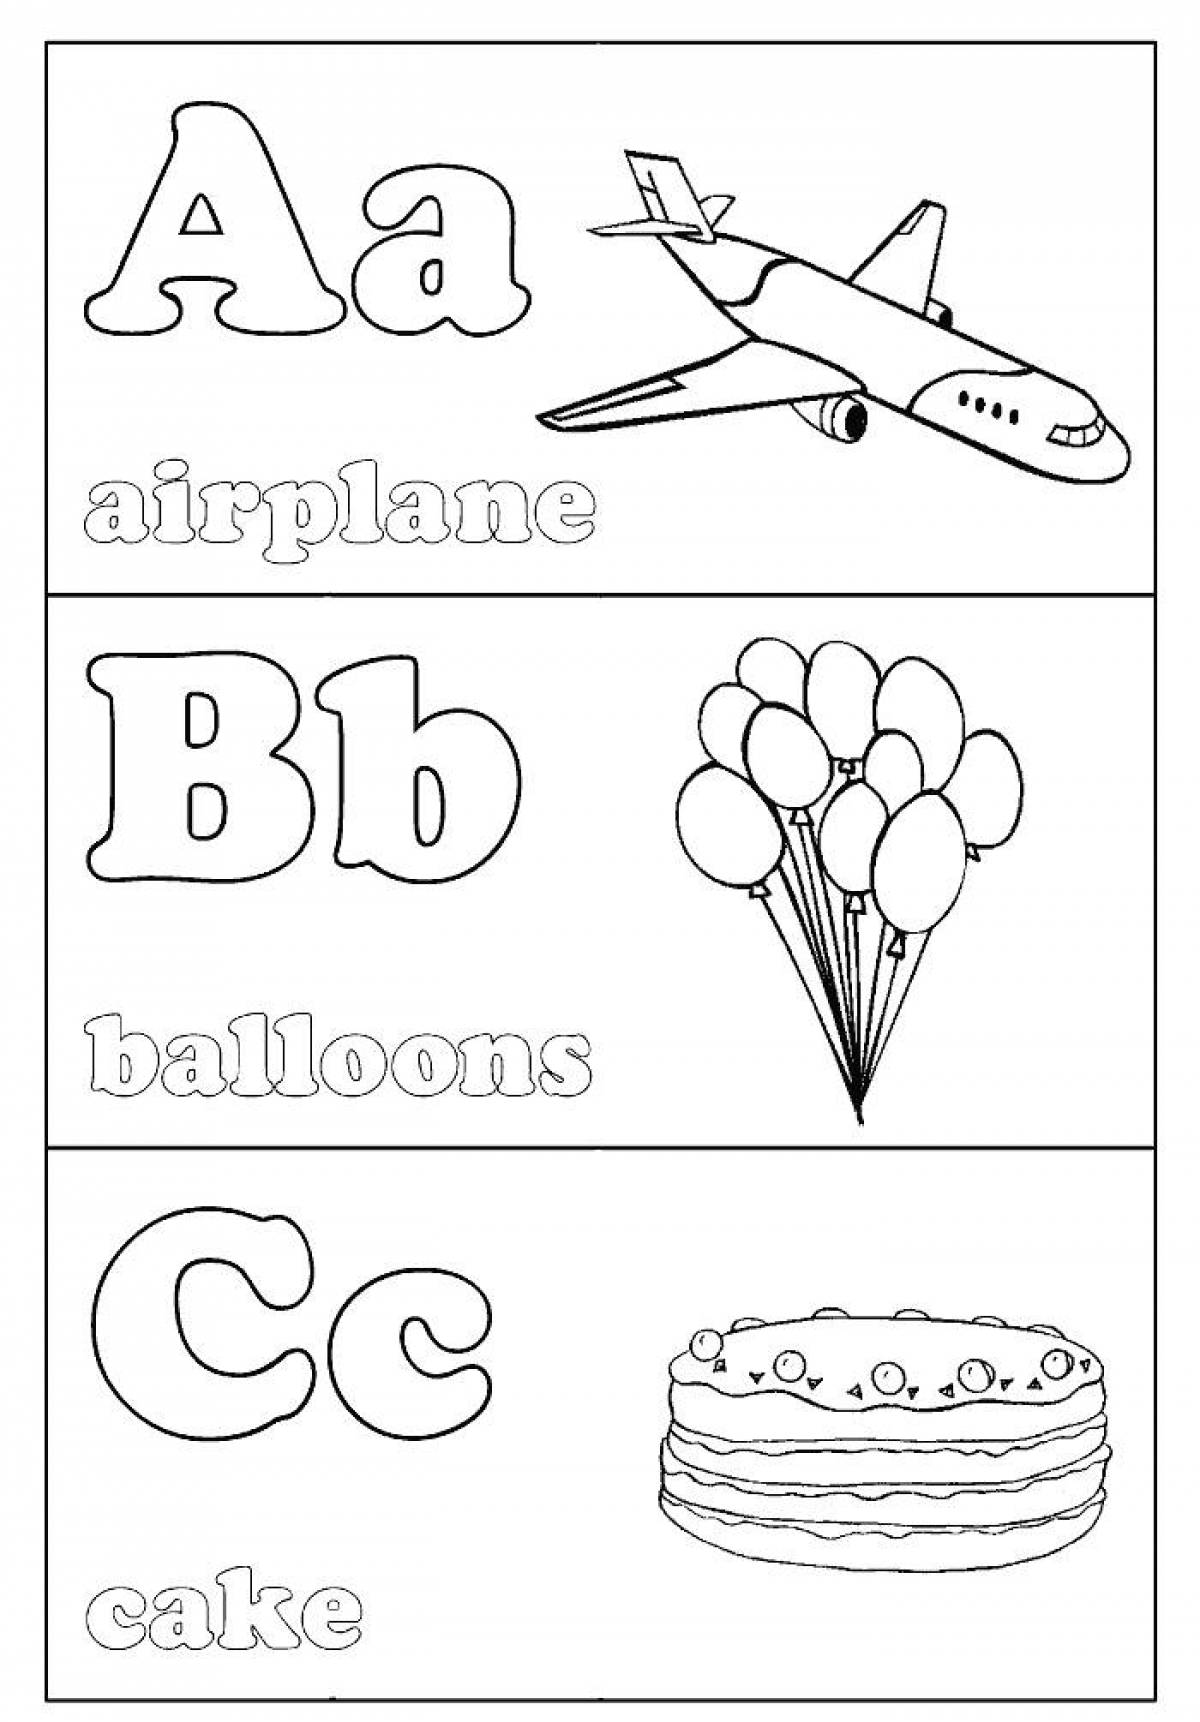 English alphabet for children grade 2 #20